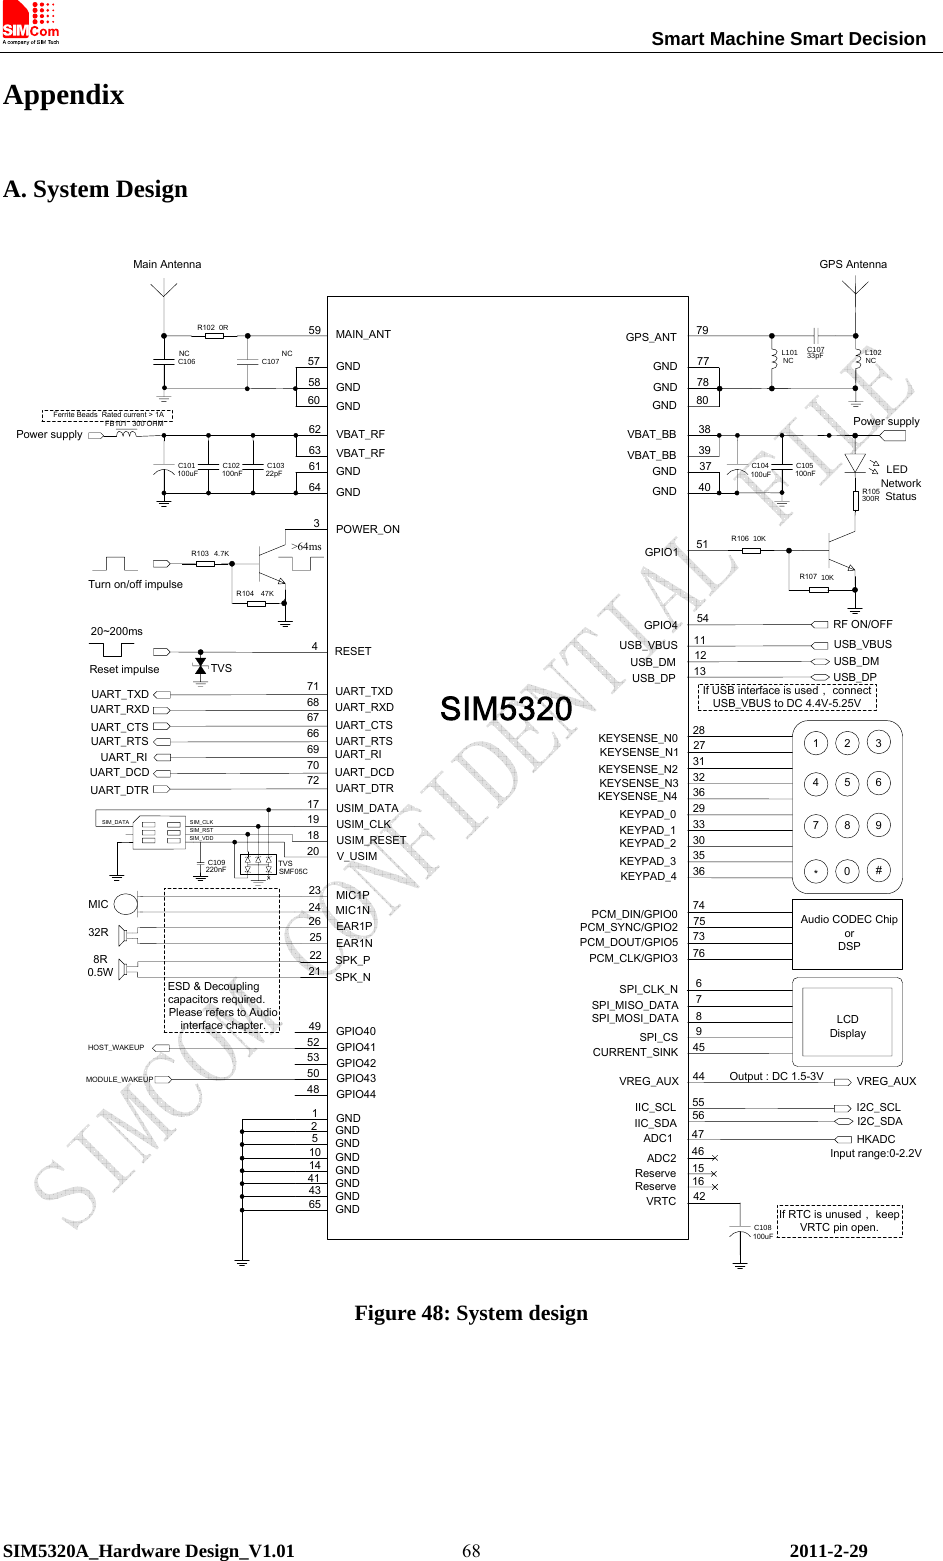                                                                Smart Machine Smart Decision SIM5320A_Hardware Design_V1.01   2011-2-29 68Appendix A. System Design C103C102C101VBAT_RFVBAT_RFVBAT_BBPower supply100uF 100nF 22pFUART_TXDUART_RXDUART_CTSUART_RTSUART_RIUART_DCDUART_DTRC109220nFV_USIMUSIM_RESETUSIM_CLKUSIM_DATAVBAT_BB62633839C105C104100uF 100nFPower supply6164GNDGND3740GNDGNDPOWER_ONRESET34Reset impulse20~200ms4.7K47KTurn on/off impulse&gt;64msUART_TXDUART_RXDUART_CTSUART_RTSUART_RIUART_DCDUART_DTR71686766697072231GNDGND0RC107C106Main AntennaNC NCMAIN_ANT5958GNDGND57C107GPS Antenna33pFGPS_ANT 7978GNDGND77 NCL101 NCL102GND 80GND60SIM_DATASIM_VDDSIM_RSTSIM_CLKSMF05CEAR1NEAR1PMIC1NMIC1PSPK_NSPK_P2426252221MIC32R8R0.5WESD &amp; Decoupling capacitors required.Please refers to Audio interface chapter.GPIO4USB_VBUSRF ON/OFF1112GPIO110K10K300RLEDNetwork StatusUSB_DP 1332USB_DMUSB_VBUSUSB_DMUSB_DP282731362933353036KEYSENSE_N0KEYSENSE_N2KEYSENSE_N1KEYSENSE_N3KEYPAD_0KEYSENSE_N4KEYPAD_1KEYPAD_3KEYPAD_2KEYPAD_476747573679845PCM_DIN/GPIO0PCM_DOUT/GPIO5PCM_SYNC/GPIO2PCM_CLK/GPIO3SPI_CLK_NSPI_MISO_DATASPI_CSSPI_MOSI_DATACURRENT_SINK123456789*0#Audio CODEC ChiporDSPLCDDisplay5154VREG_AUX VREG_AUX44IIC_SCL I2C_SCL55IIC_SDA I2C_SDA56ADC1 HKADCInput range:0-2.2VADC24746ReserveReserve1516VRTC1719182042C108If RTC is unused， keep VRTC pin open.GPIO405253504849GPIO41GPIO42GPIO43GPIO445GNDGND21014 GNDGND43 GNDGND4165Output : DC 1.5-3VR102R103R104R105R106R107TVSIf USB interface is used， connect USB_VBUS to DC 4.4V-5.25V100uFHOST_WAKEUPMODULE_WAKEUPTVSFB101 300 OHMFerrite Beads Rated current &gt; 1A Figure 48: System design      